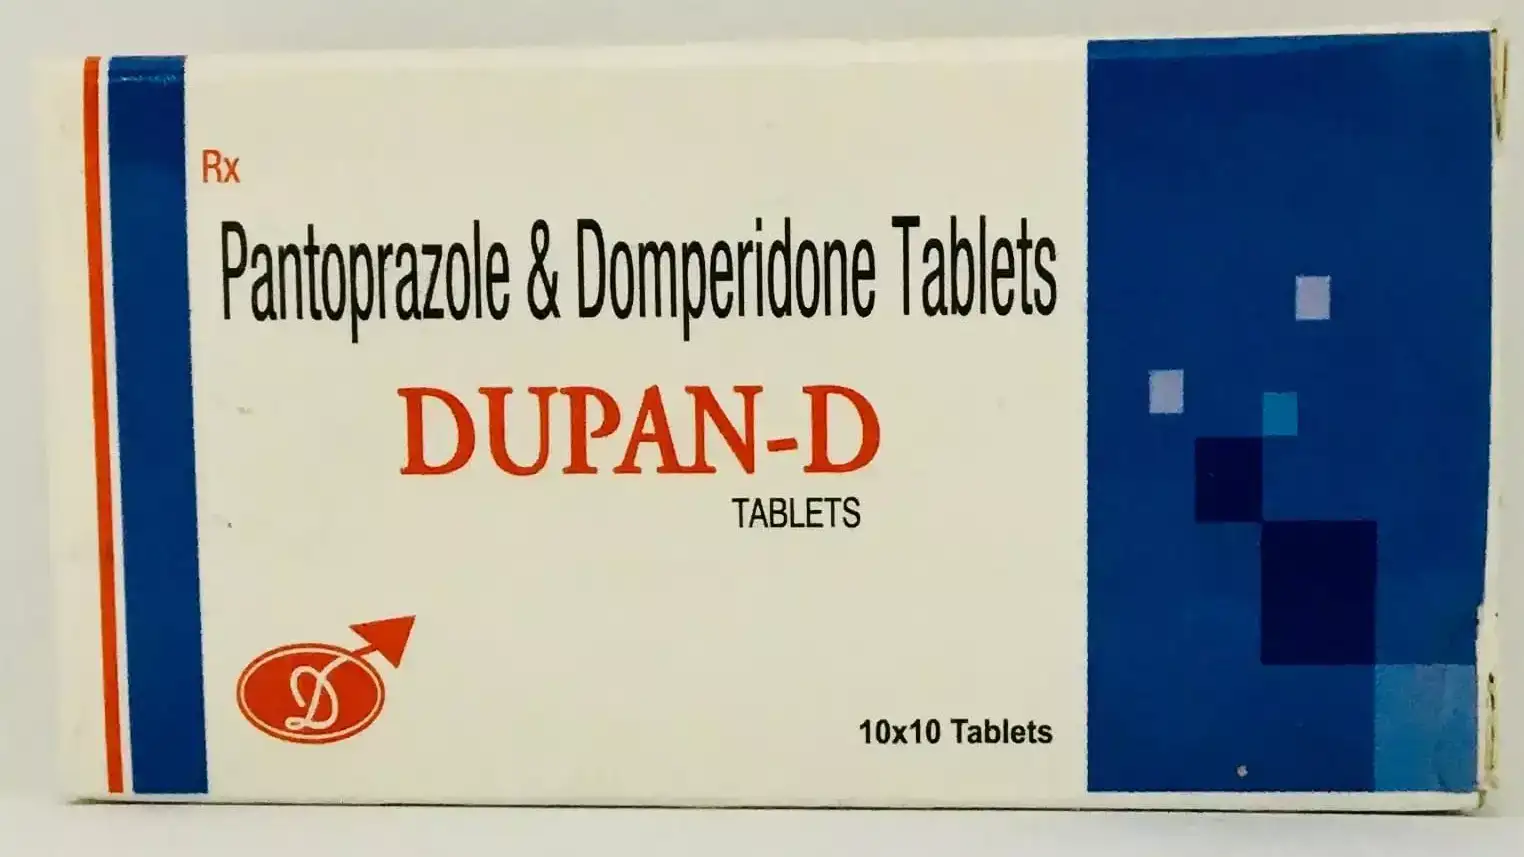 Dupan-D 10mg/40mg Tablet